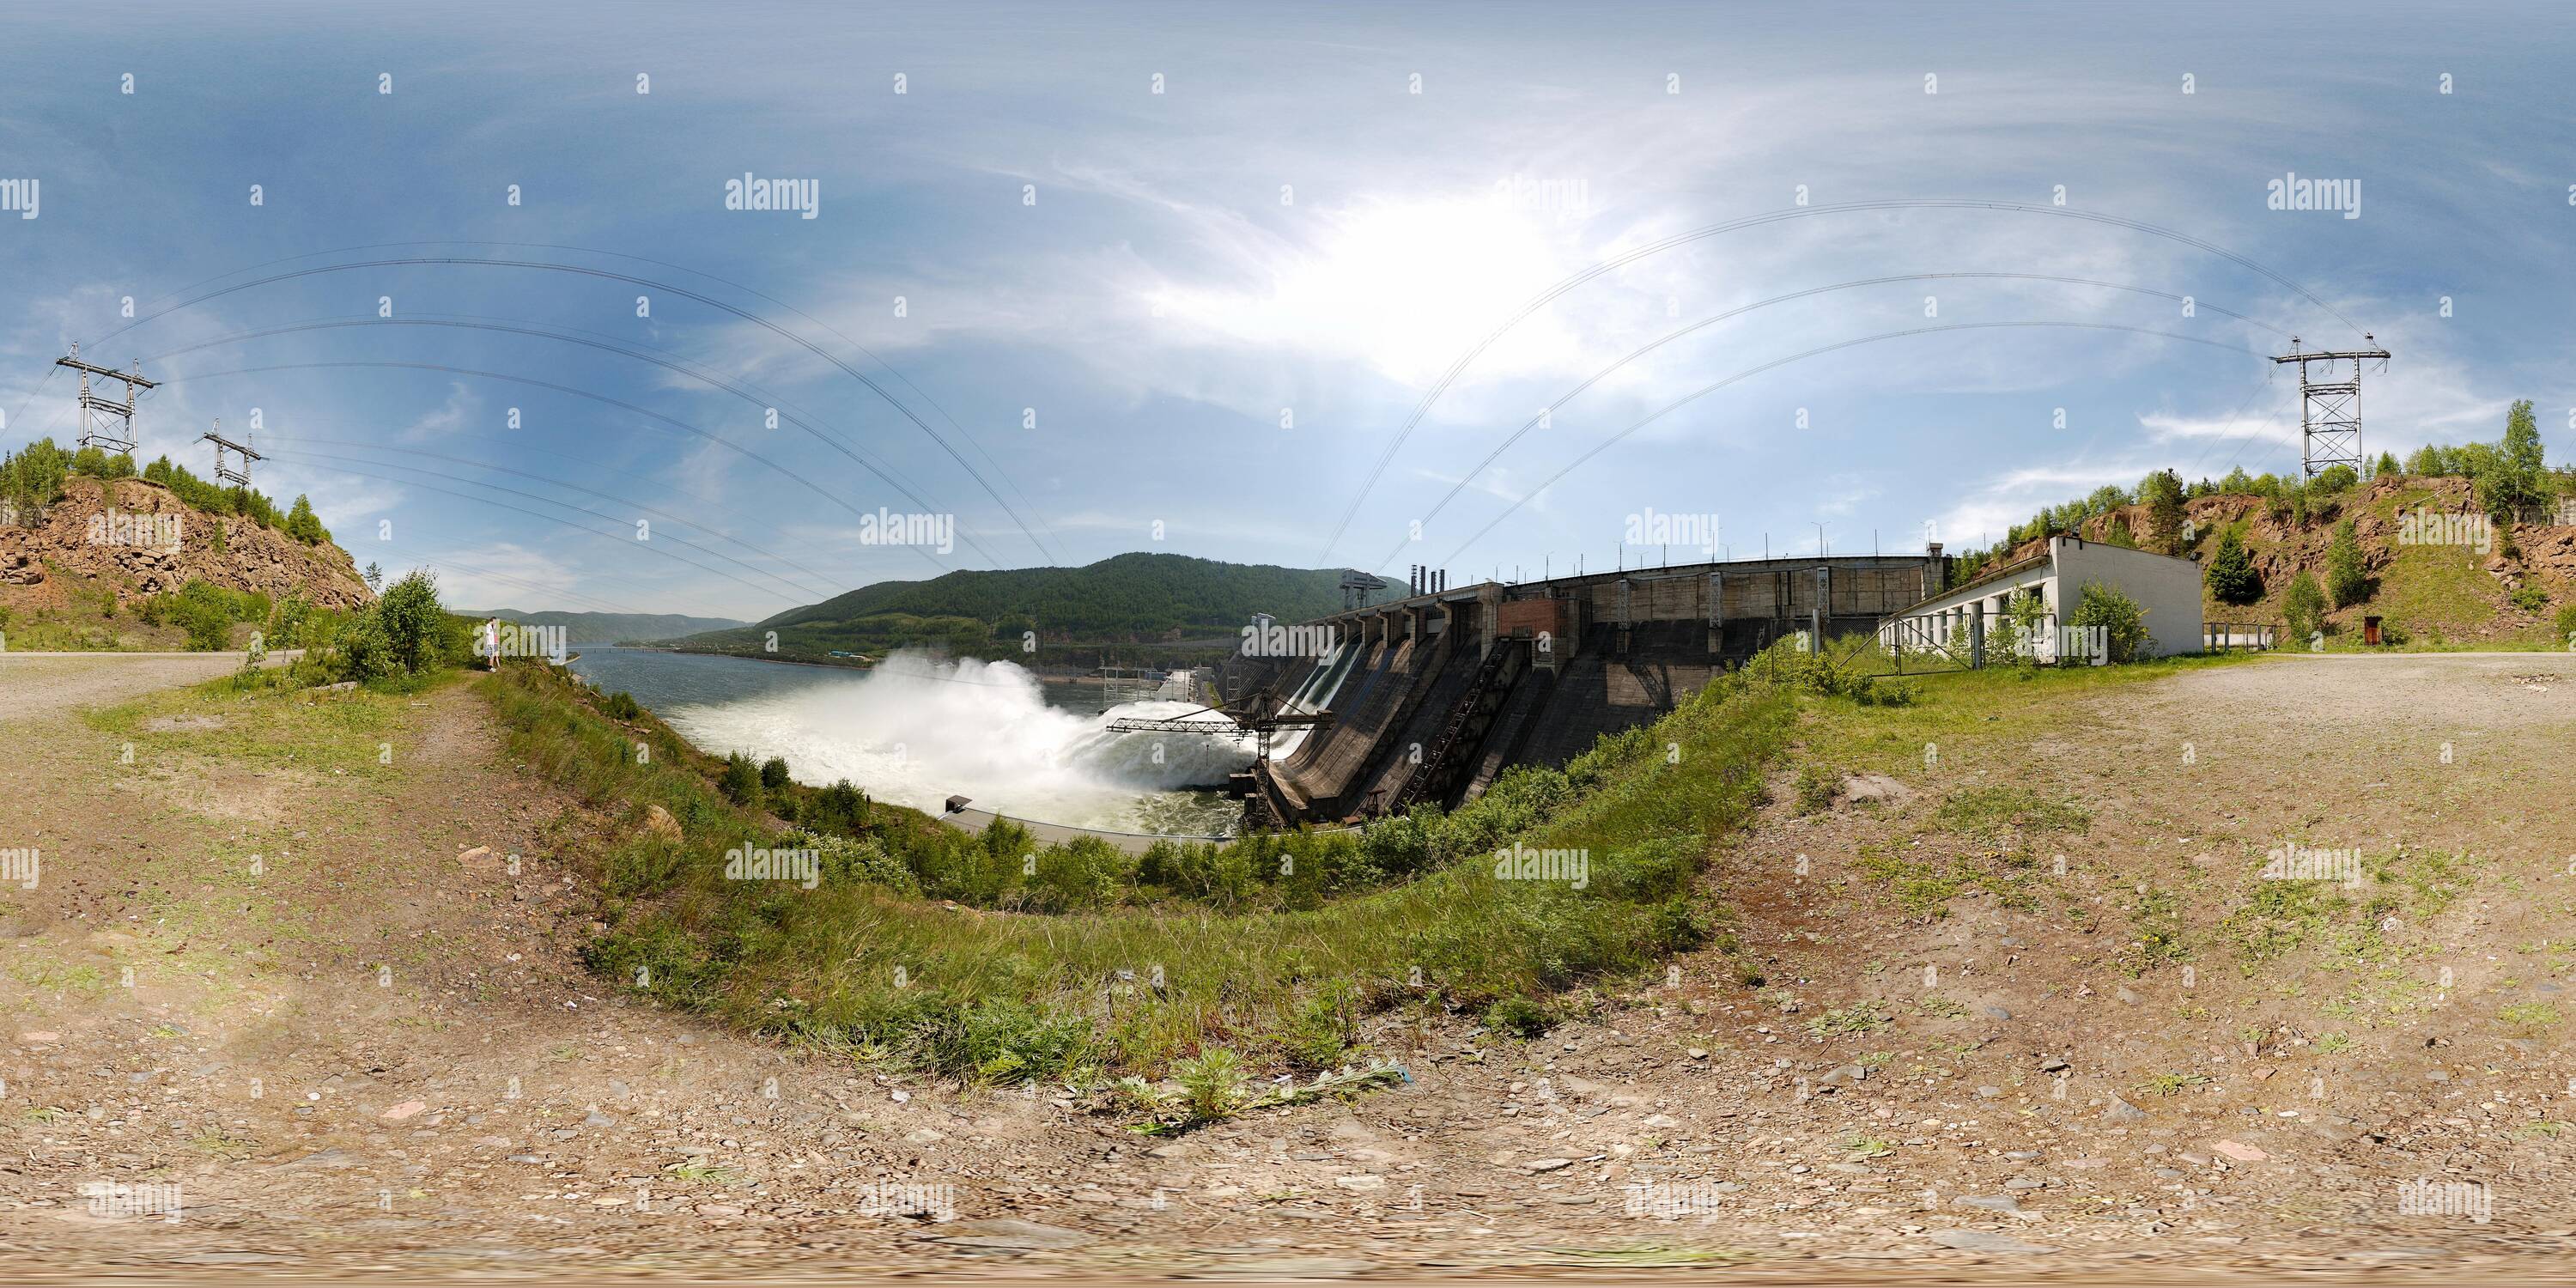 Krasnoyarsk dam -Fotos und -Bildmaterial in hoher Auflösung – Alamy